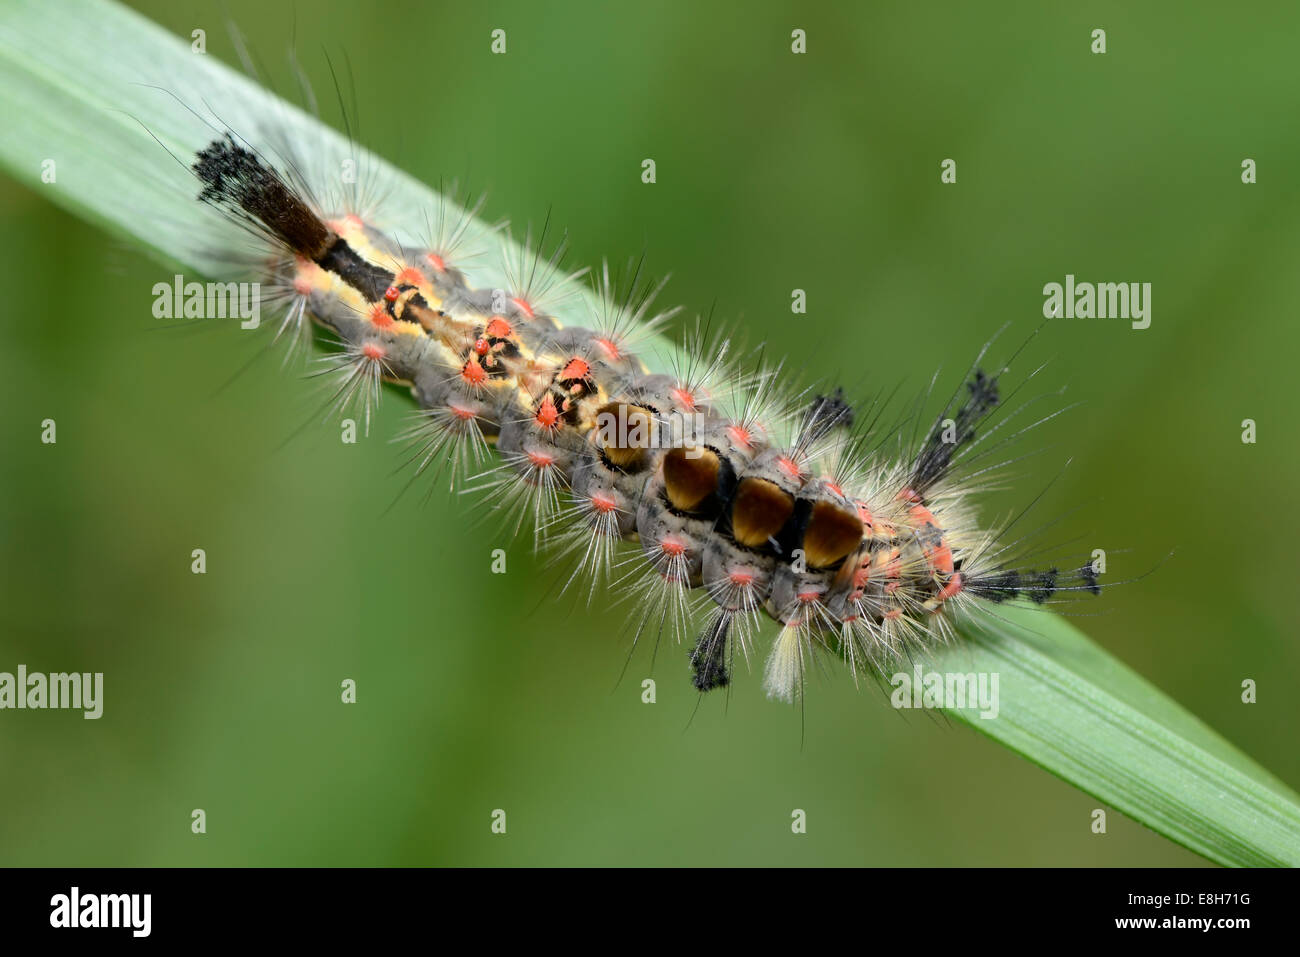 Caterpillar of Rusty Tussock Moth, Orgyia antiqua, on blade Stock Photo